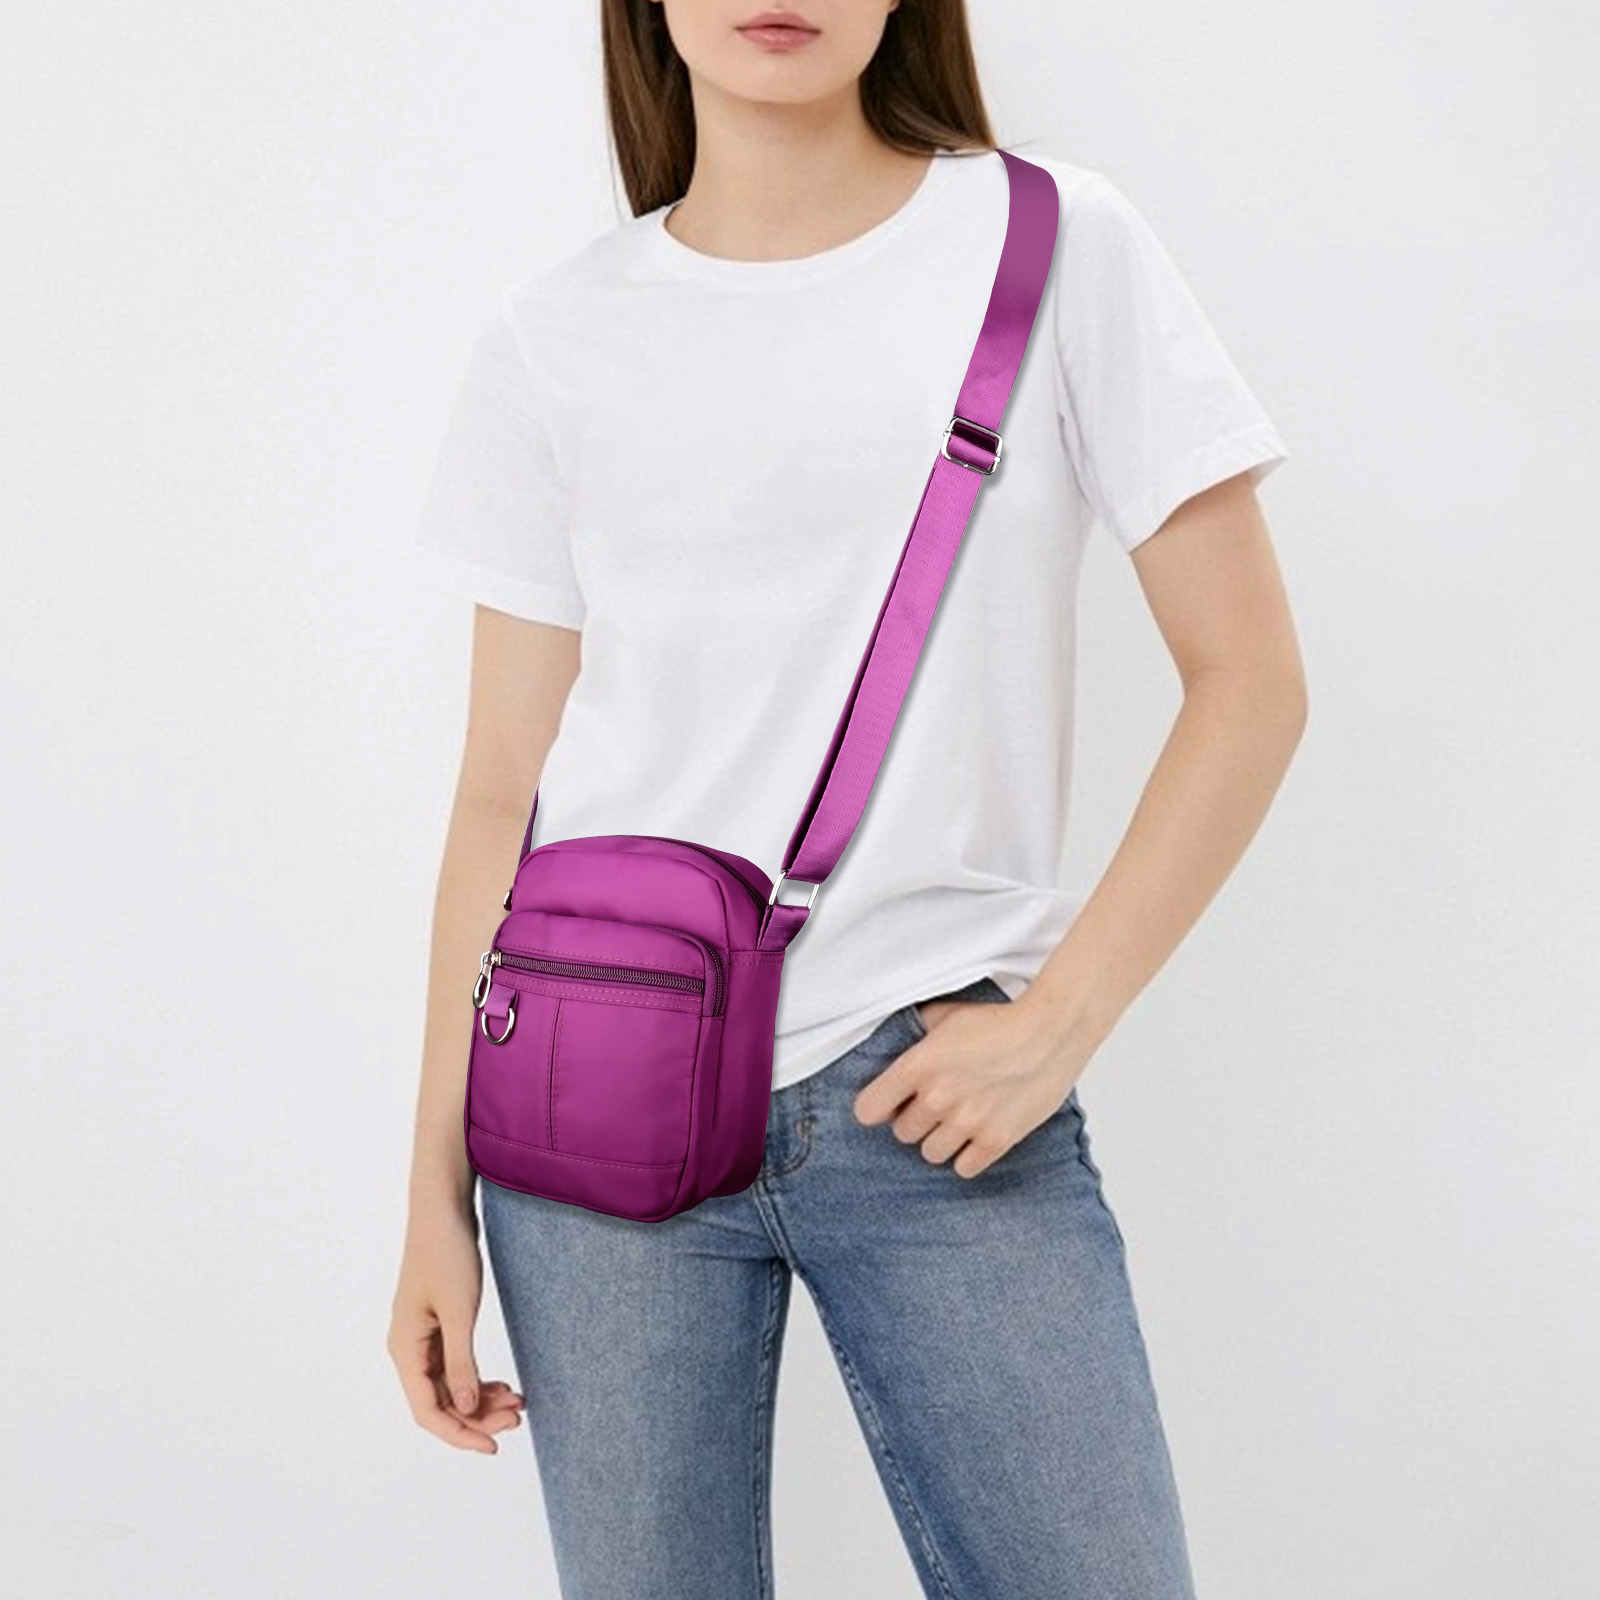 TSV Small Crossbody Bag for Women, Waterproof Ladies Anti-thief Shoulder Bag, Oxford Fabric Fashion Handbag with Adjustable Strap - image 5 of 9